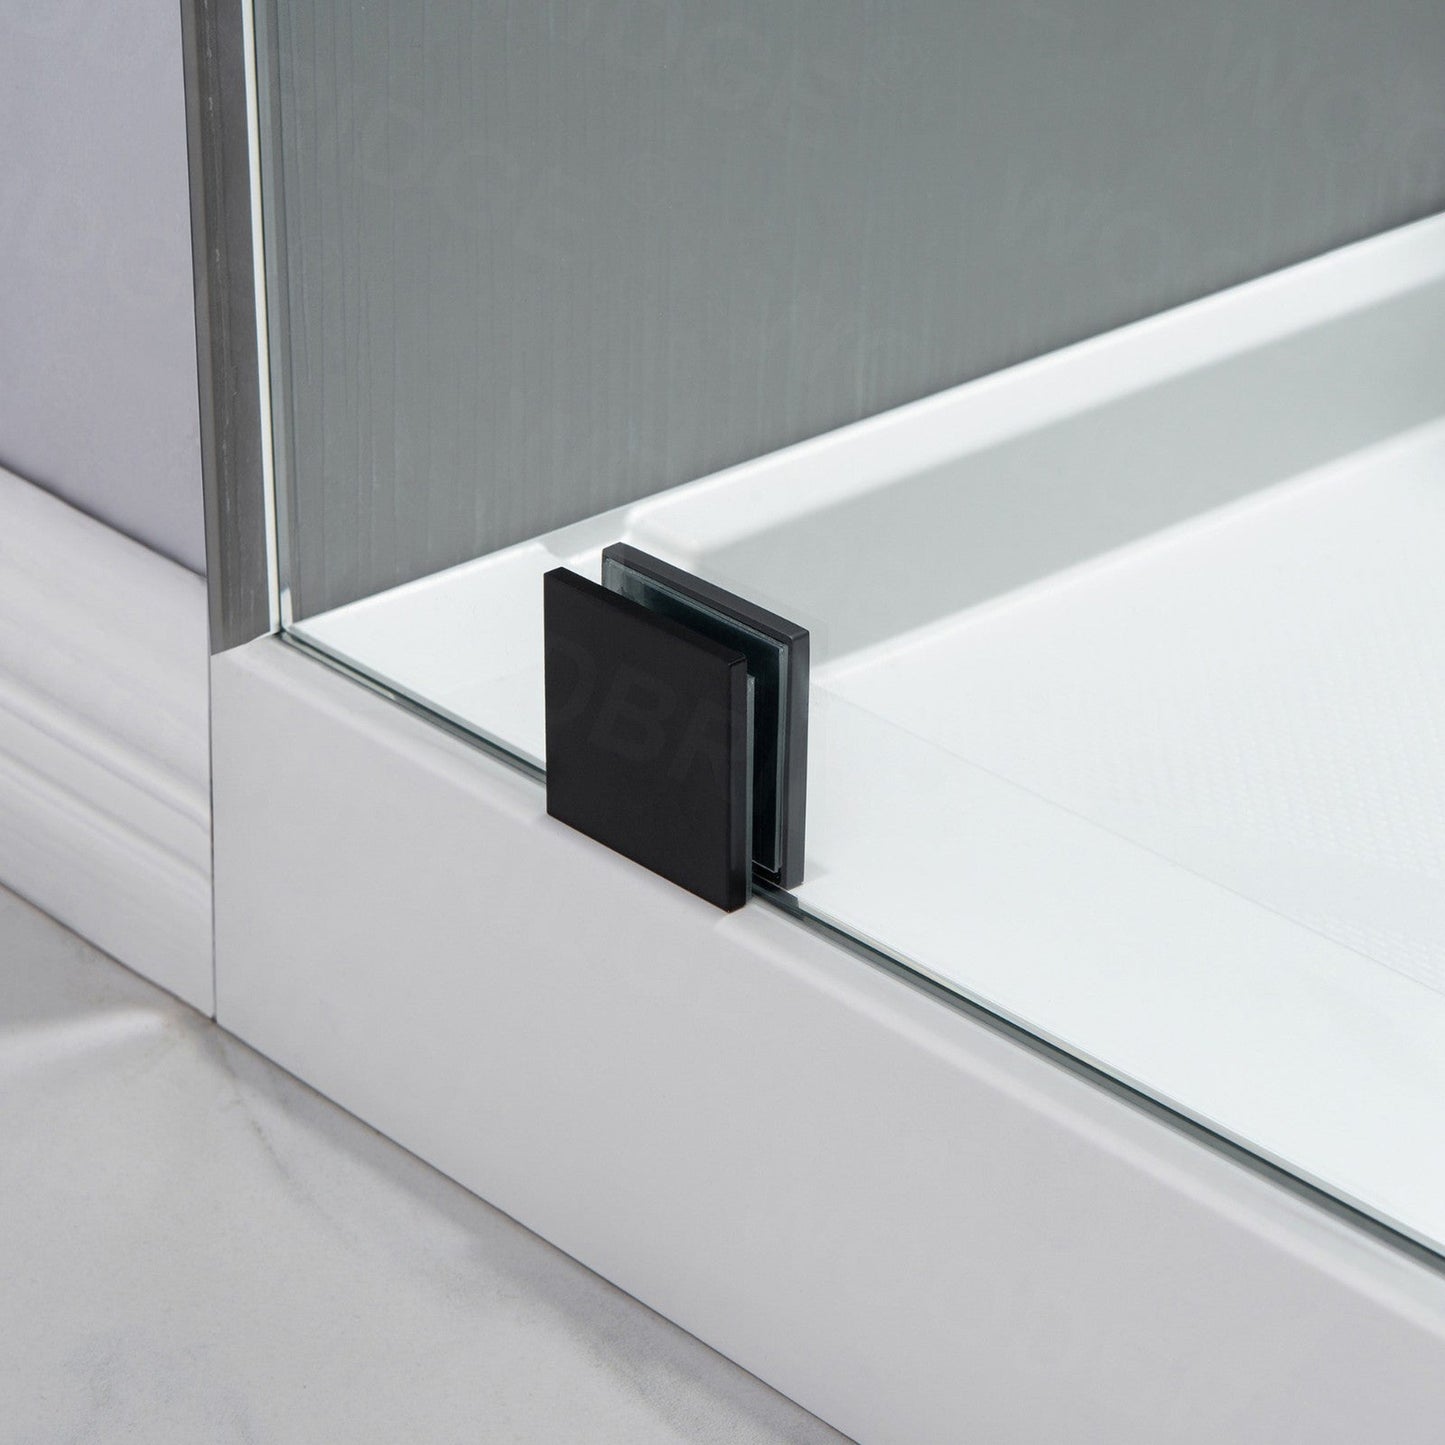 WoodBridge 48" W x 76" H Clear Tempered Glass Frameless Shower Door With Matte Black Hardware Finish